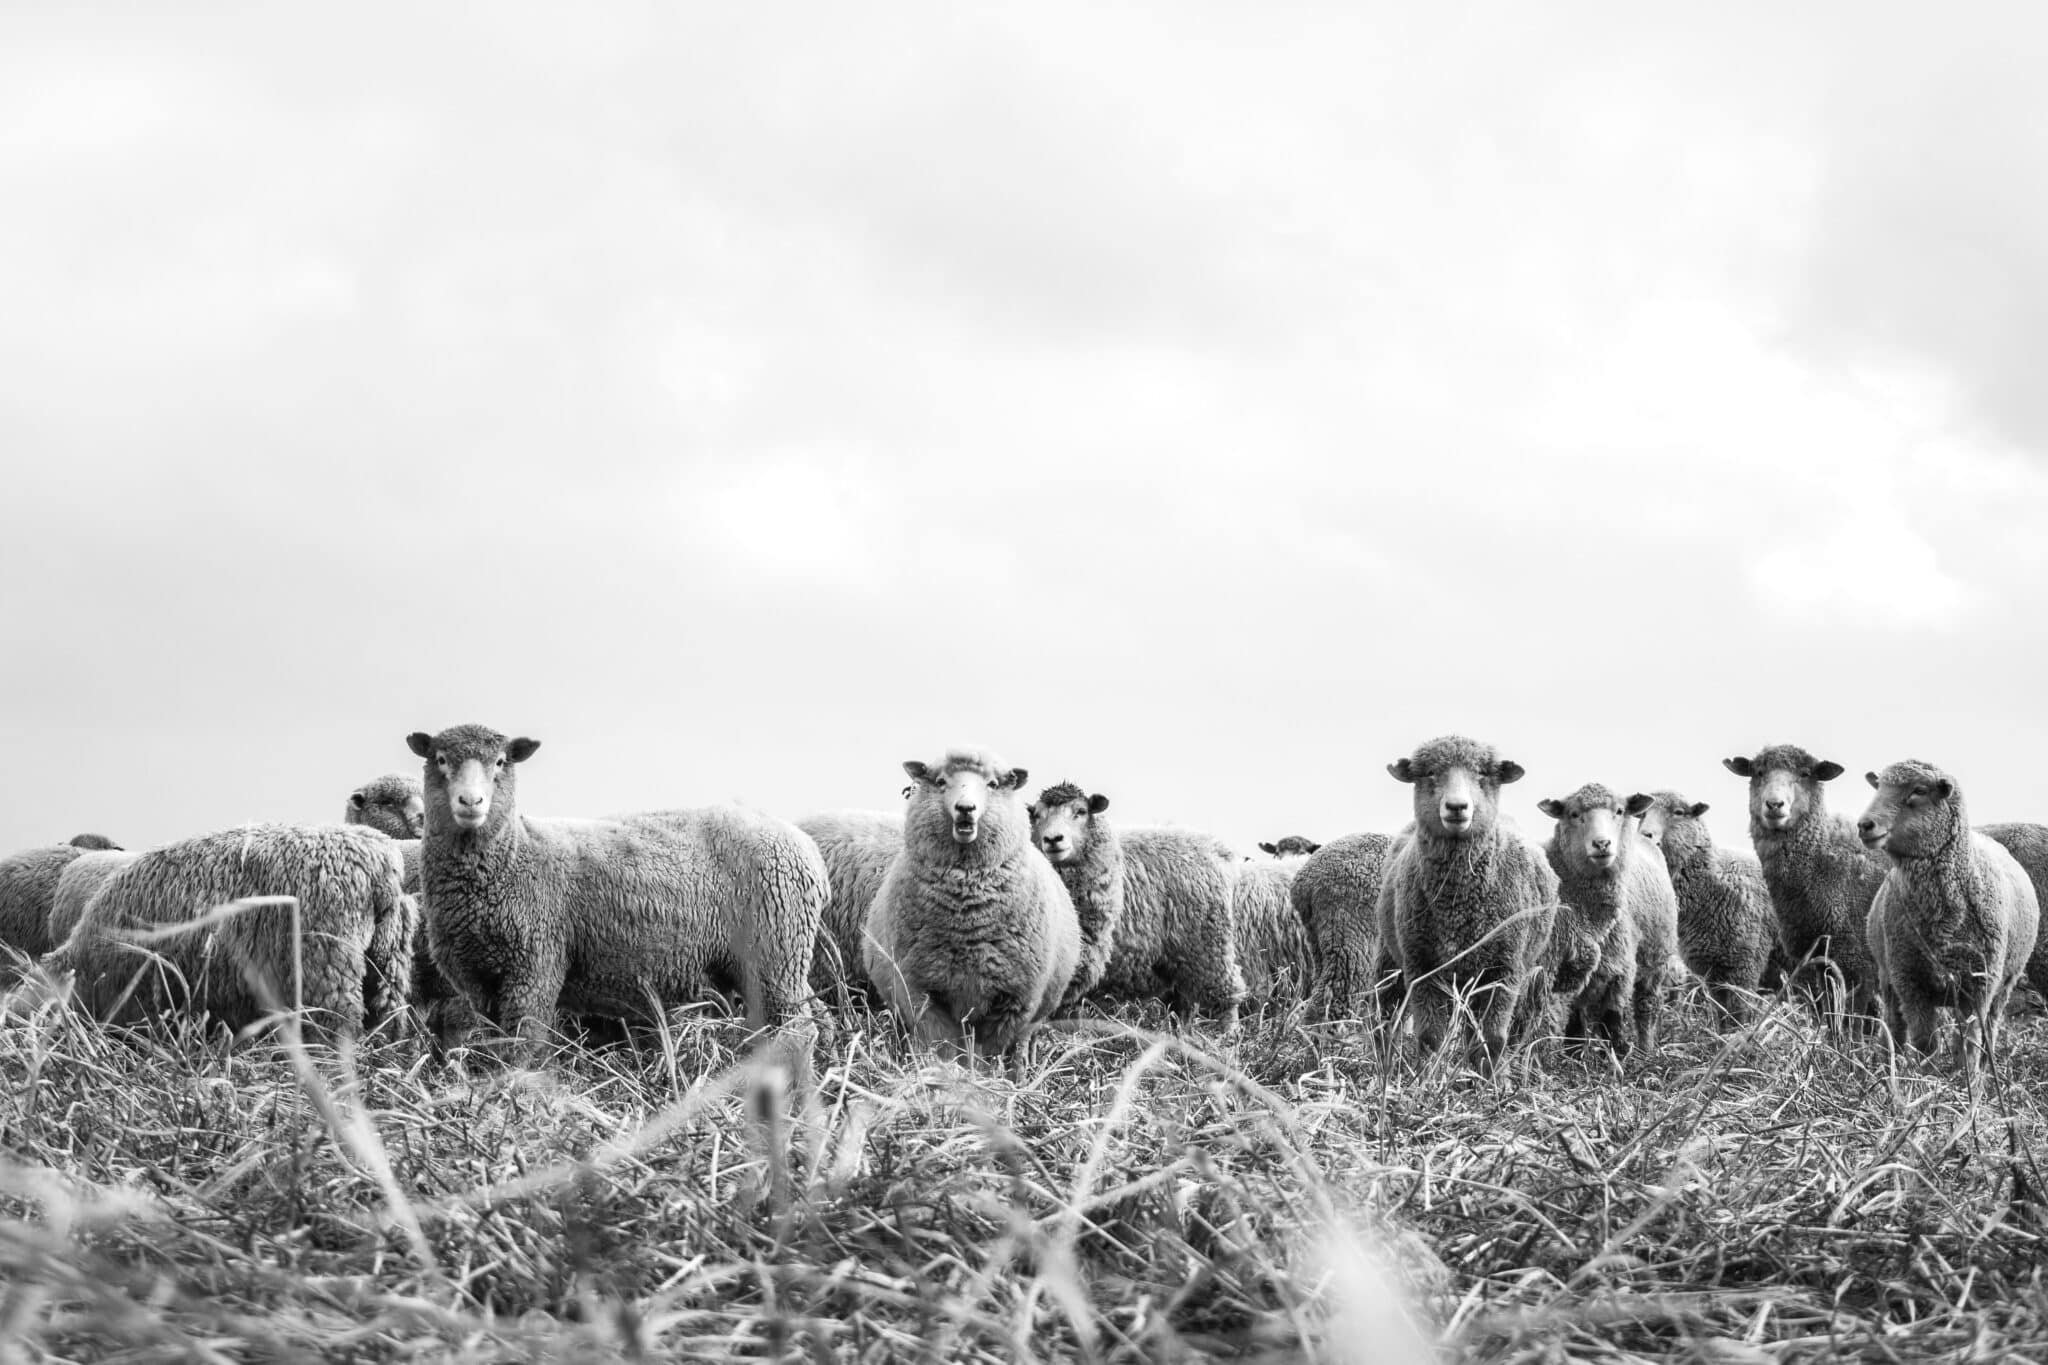 Field of sheep eating hay and looking at the camera